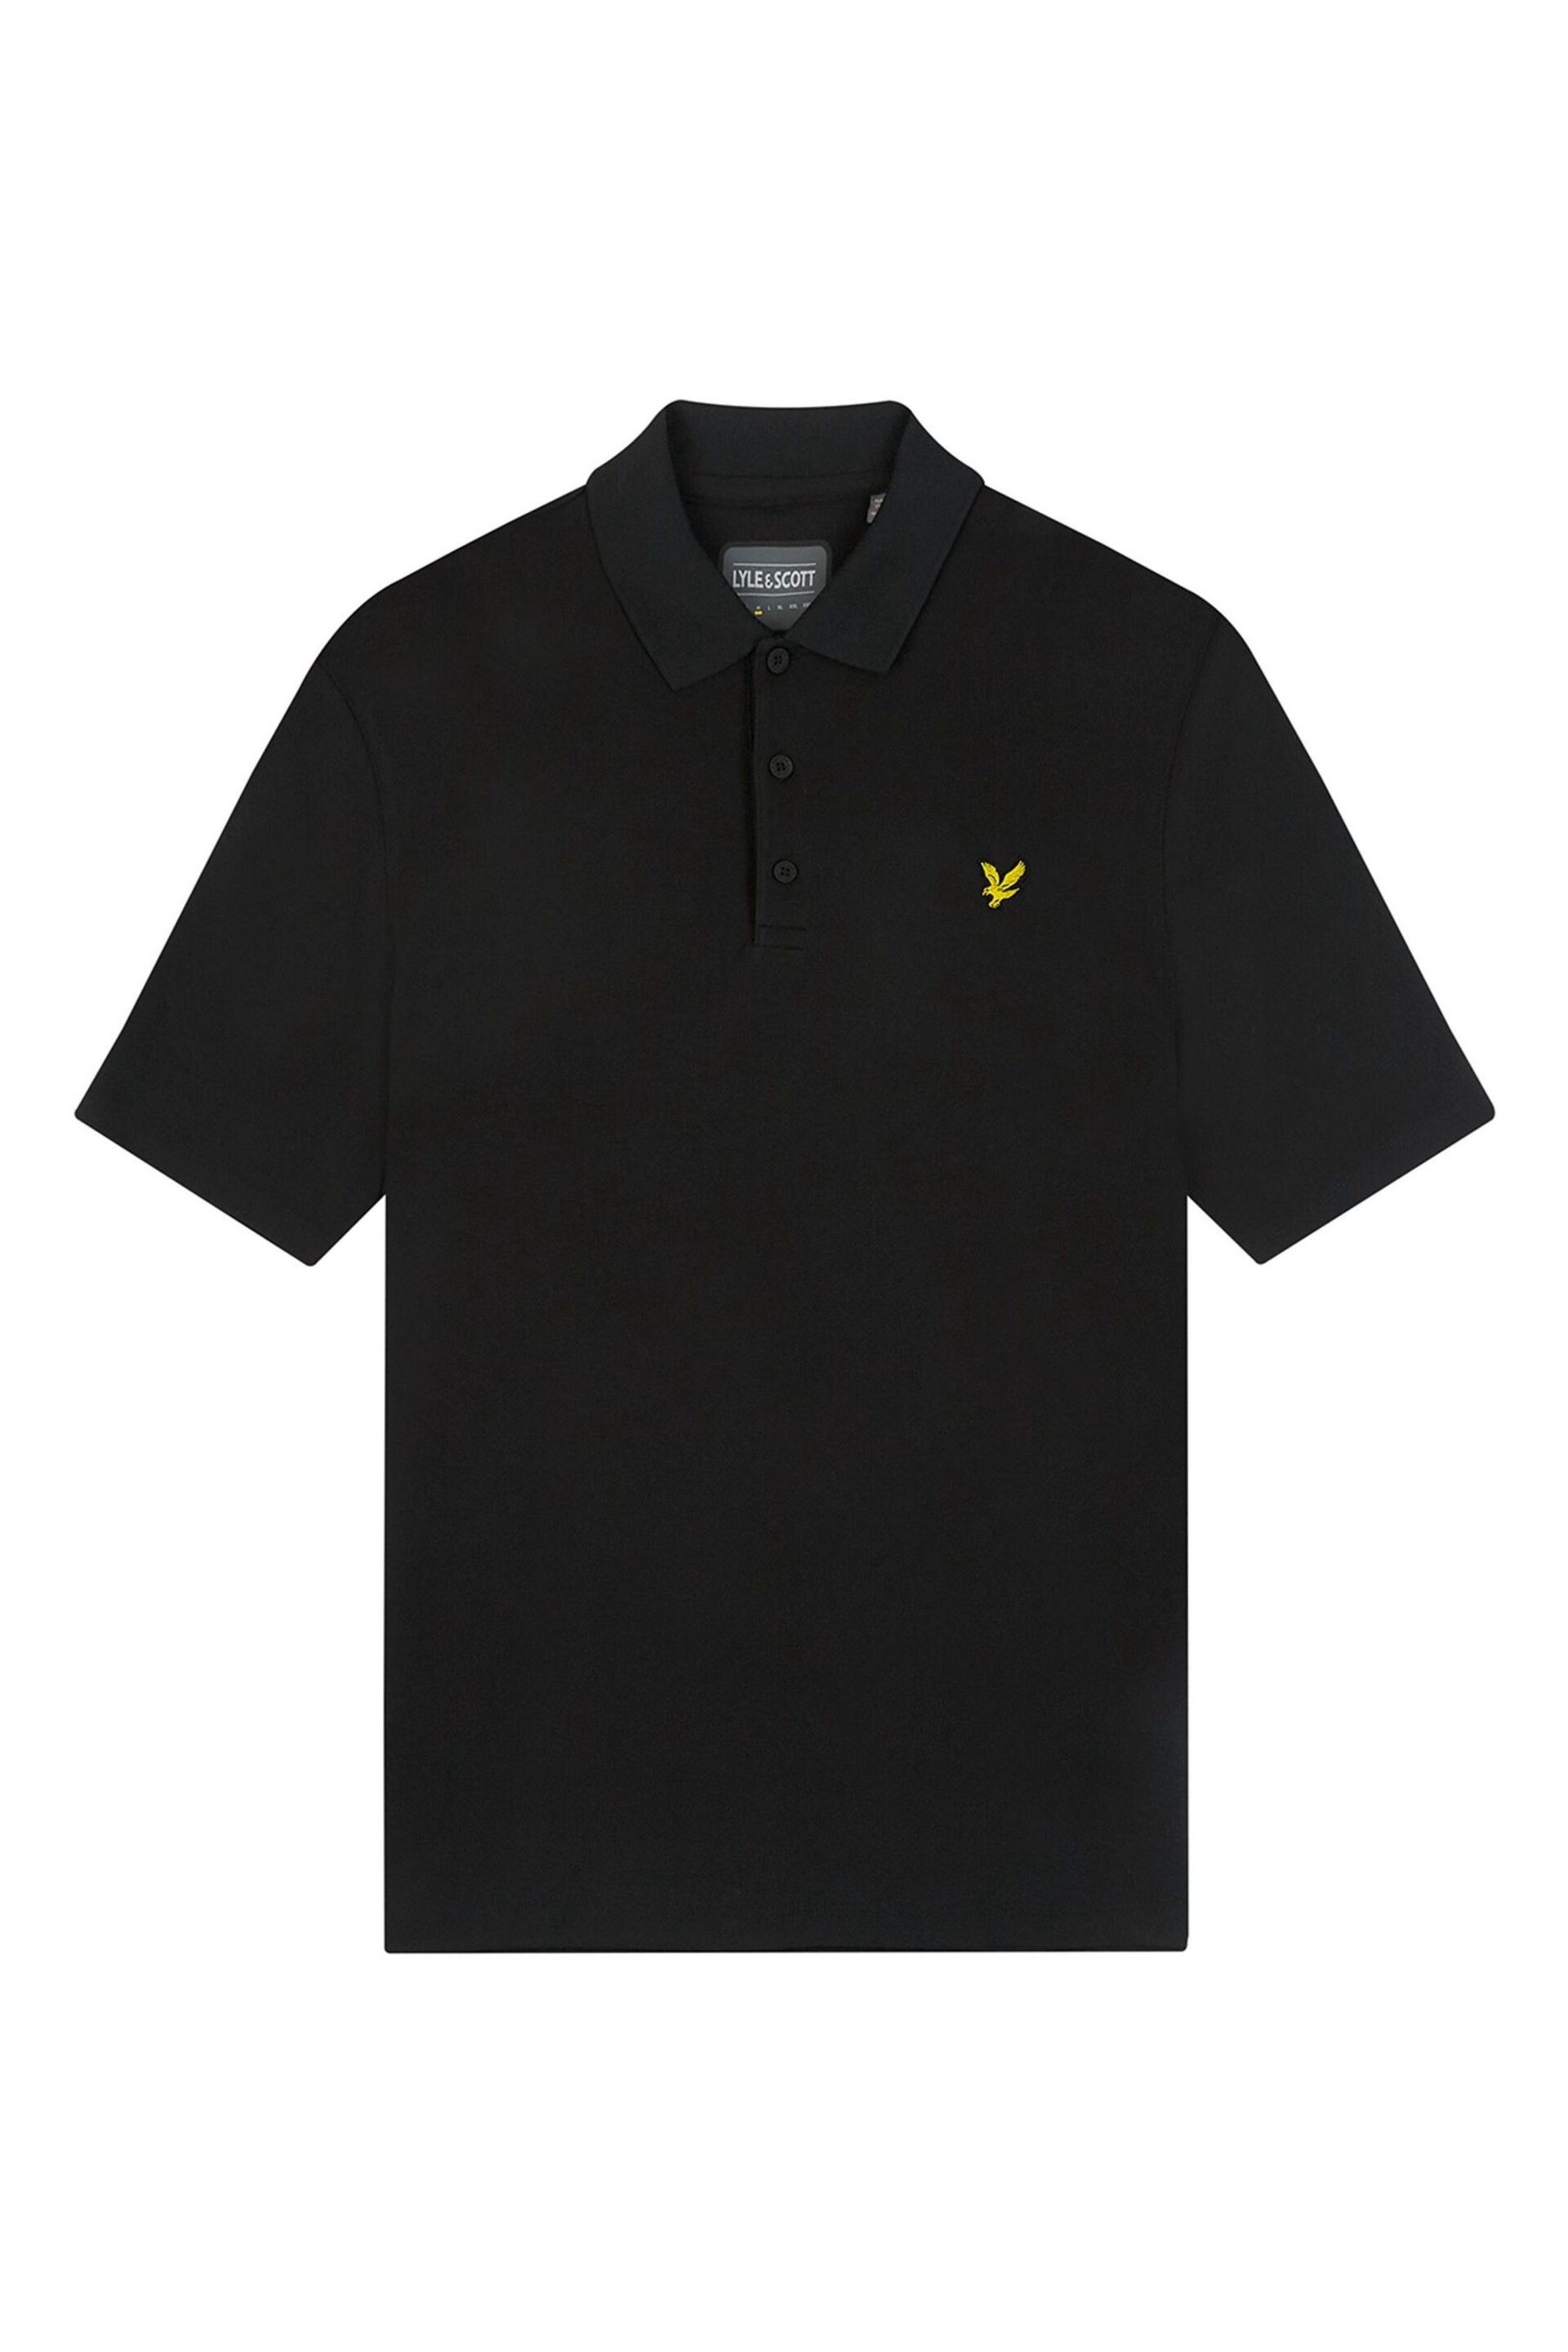 Lyle & Scott Golf Tech Black Polo Shirt - Image 5 of 5